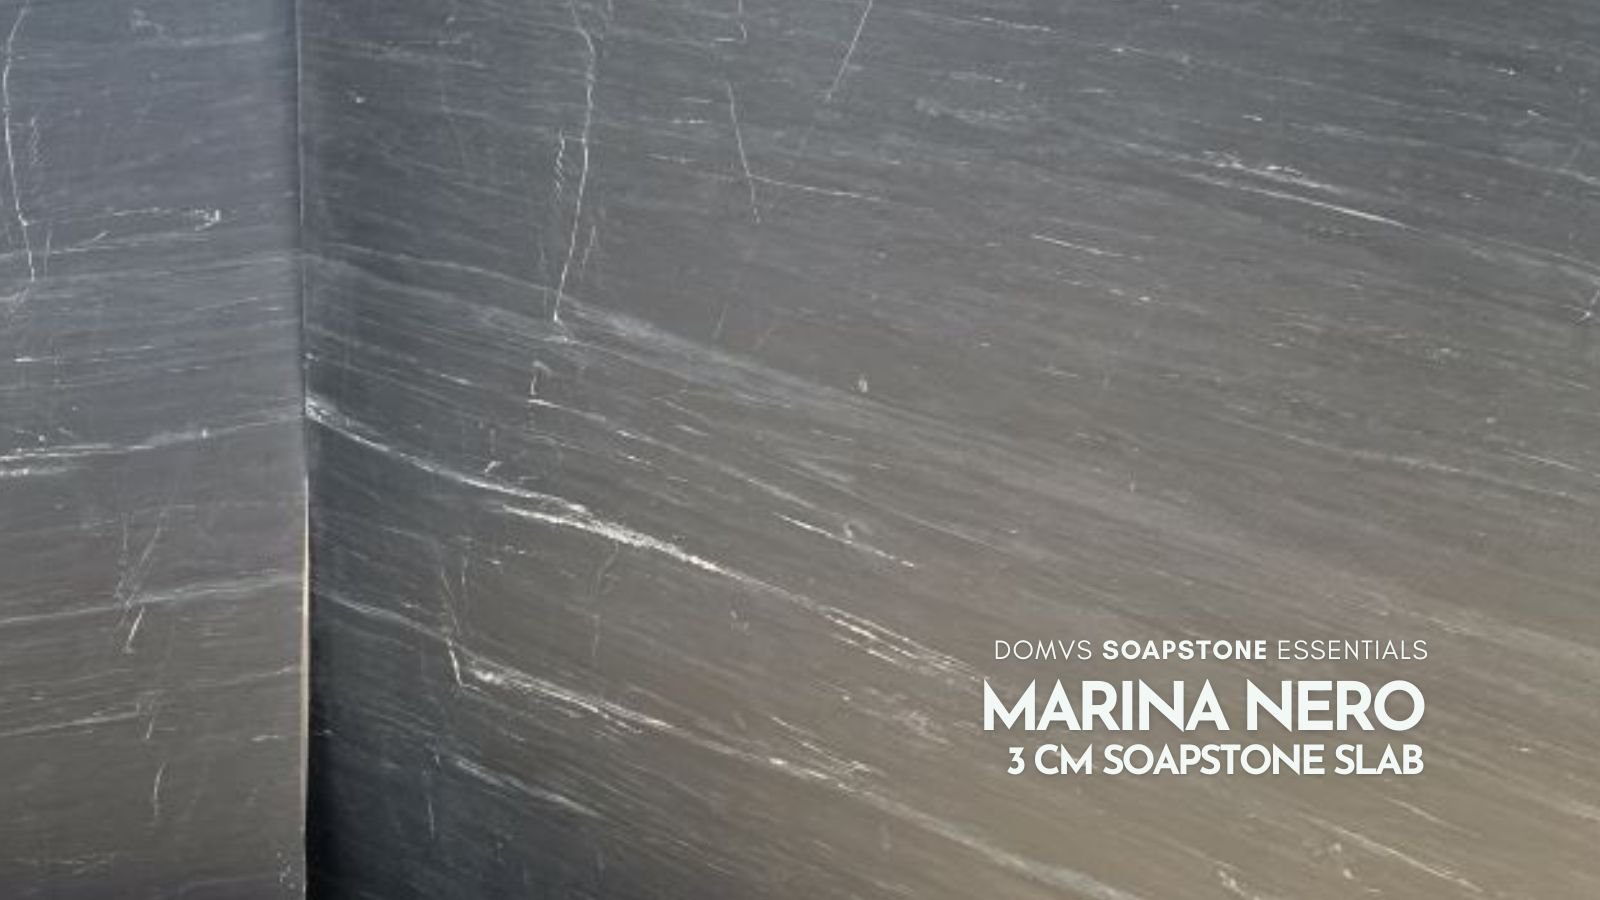 MARINA nero SOAPSTONE 122 X 73 2CMBV III DOMVS  SURFACES.jpg